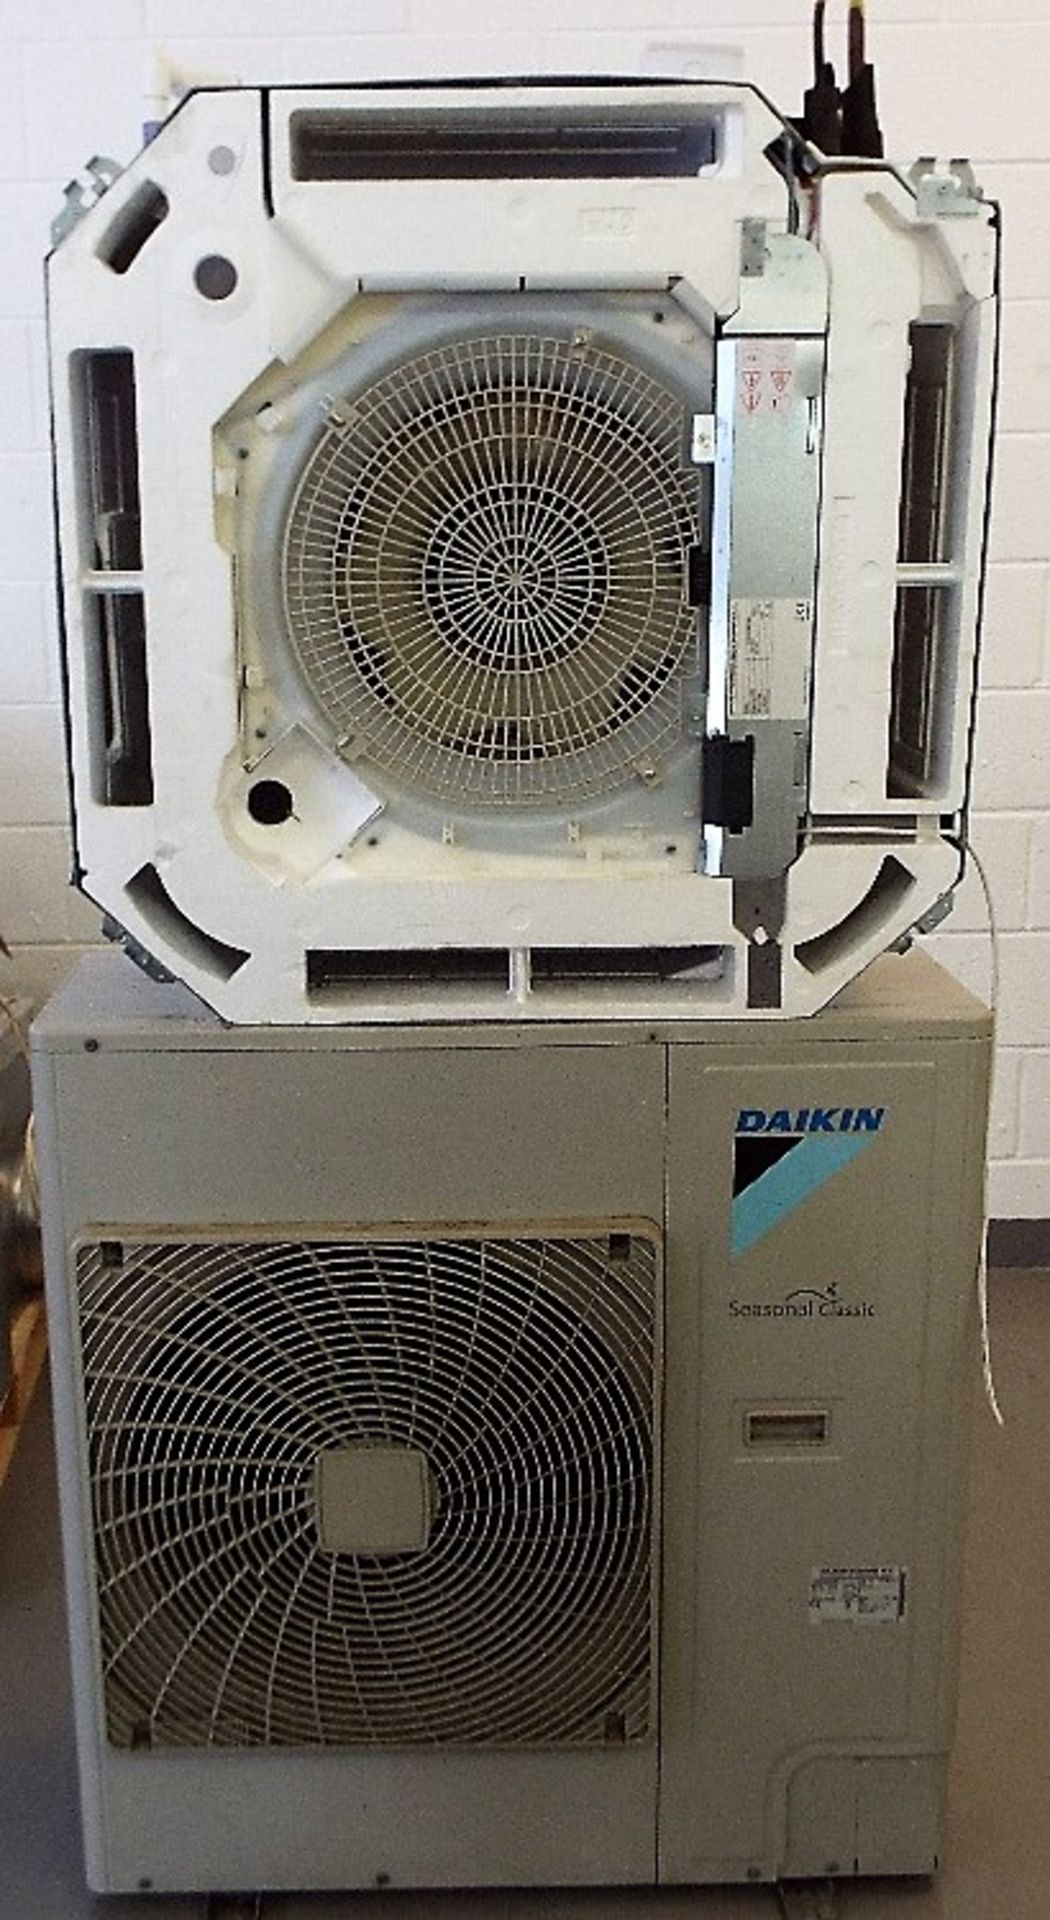 Daikin Air Conditioning Set.